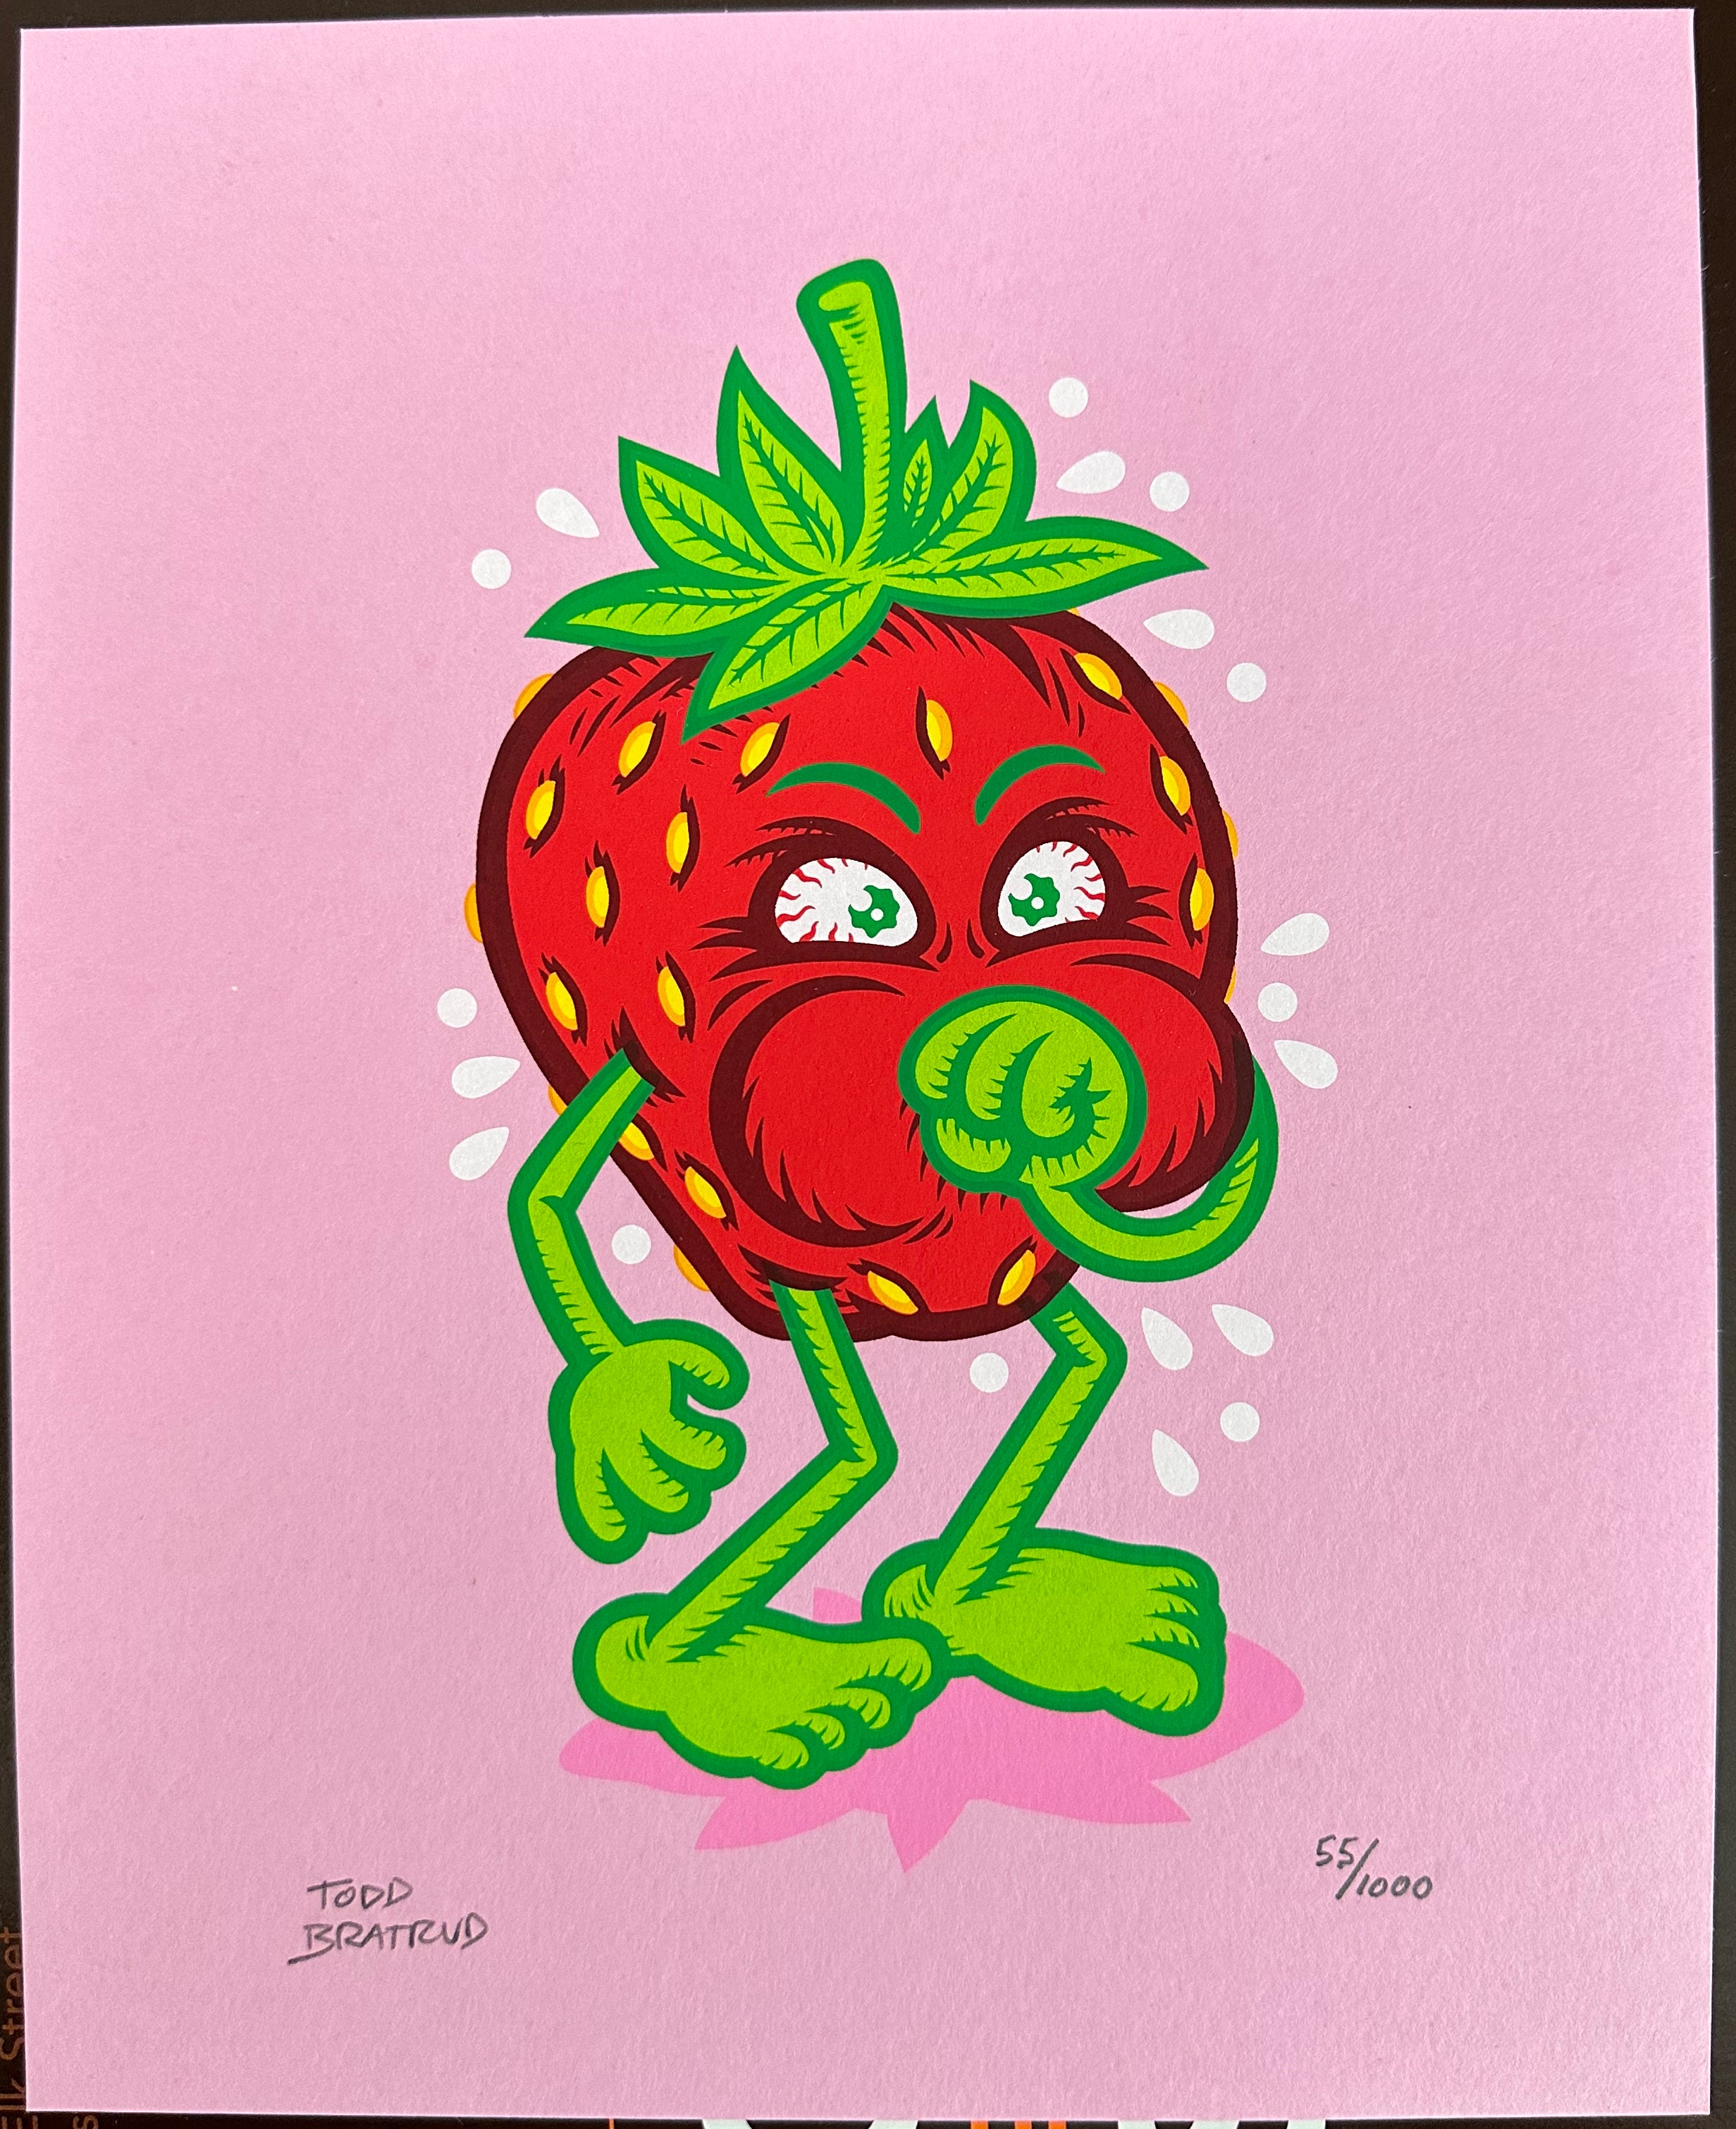 Impresión de Todd Bratrud 'Strawberry Cough' - (Firmado, Edición de 1000)